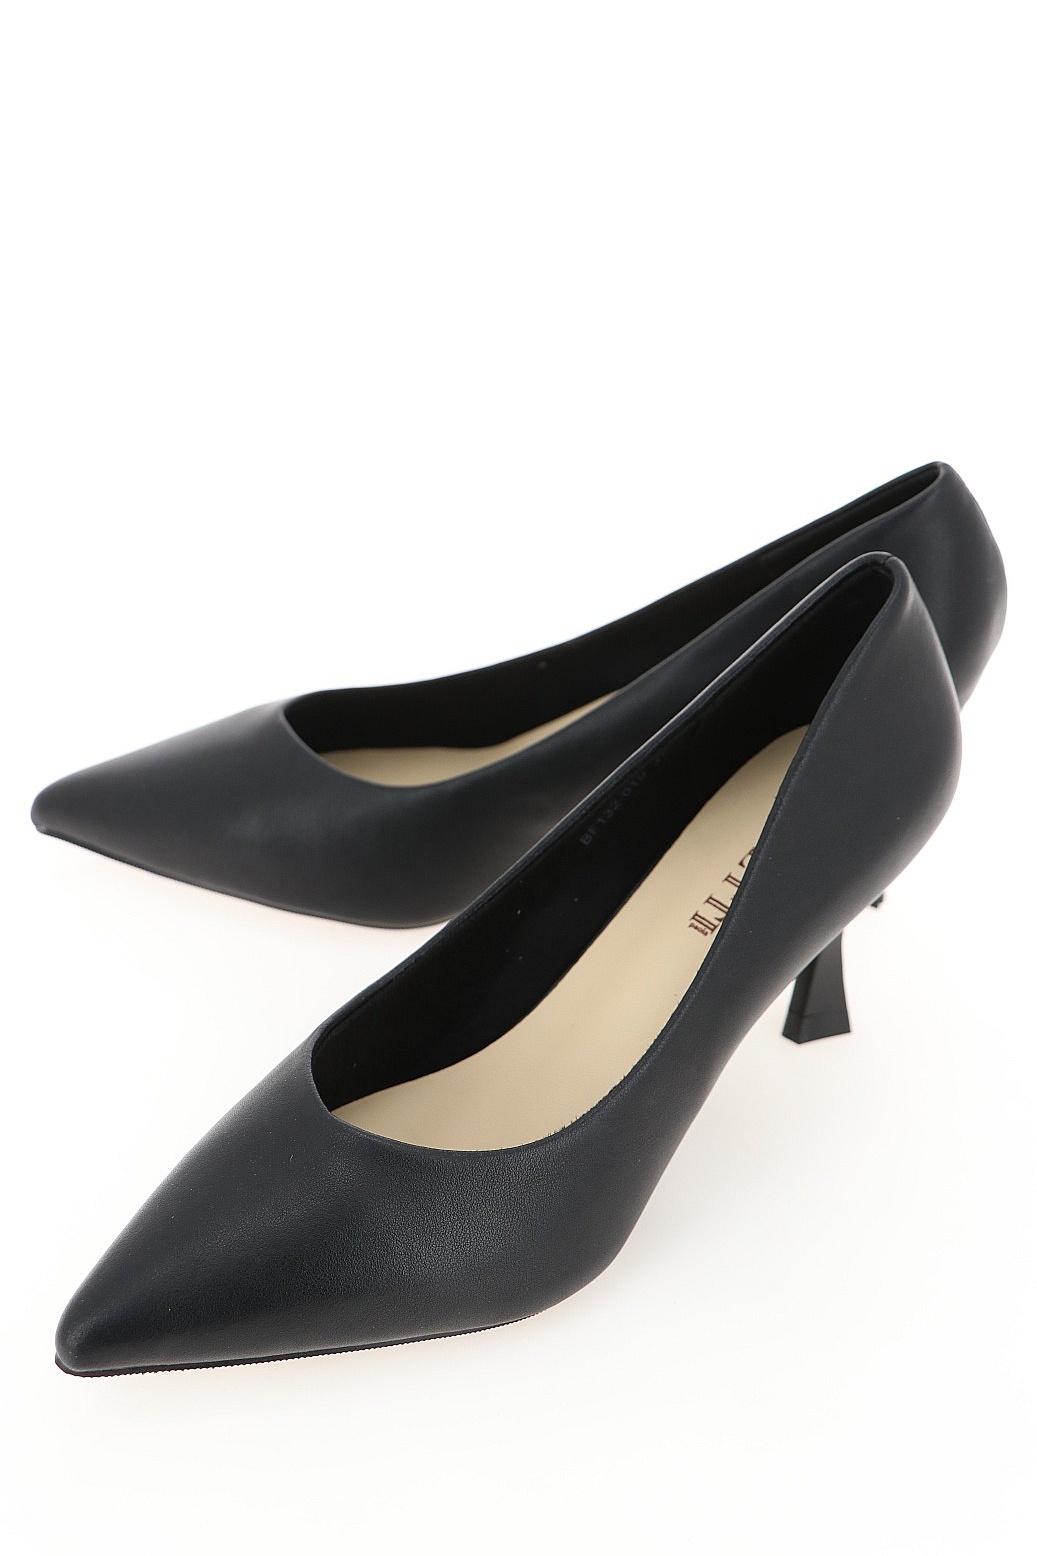 Туфли женские Benetti BF132-010 черные 37 RU